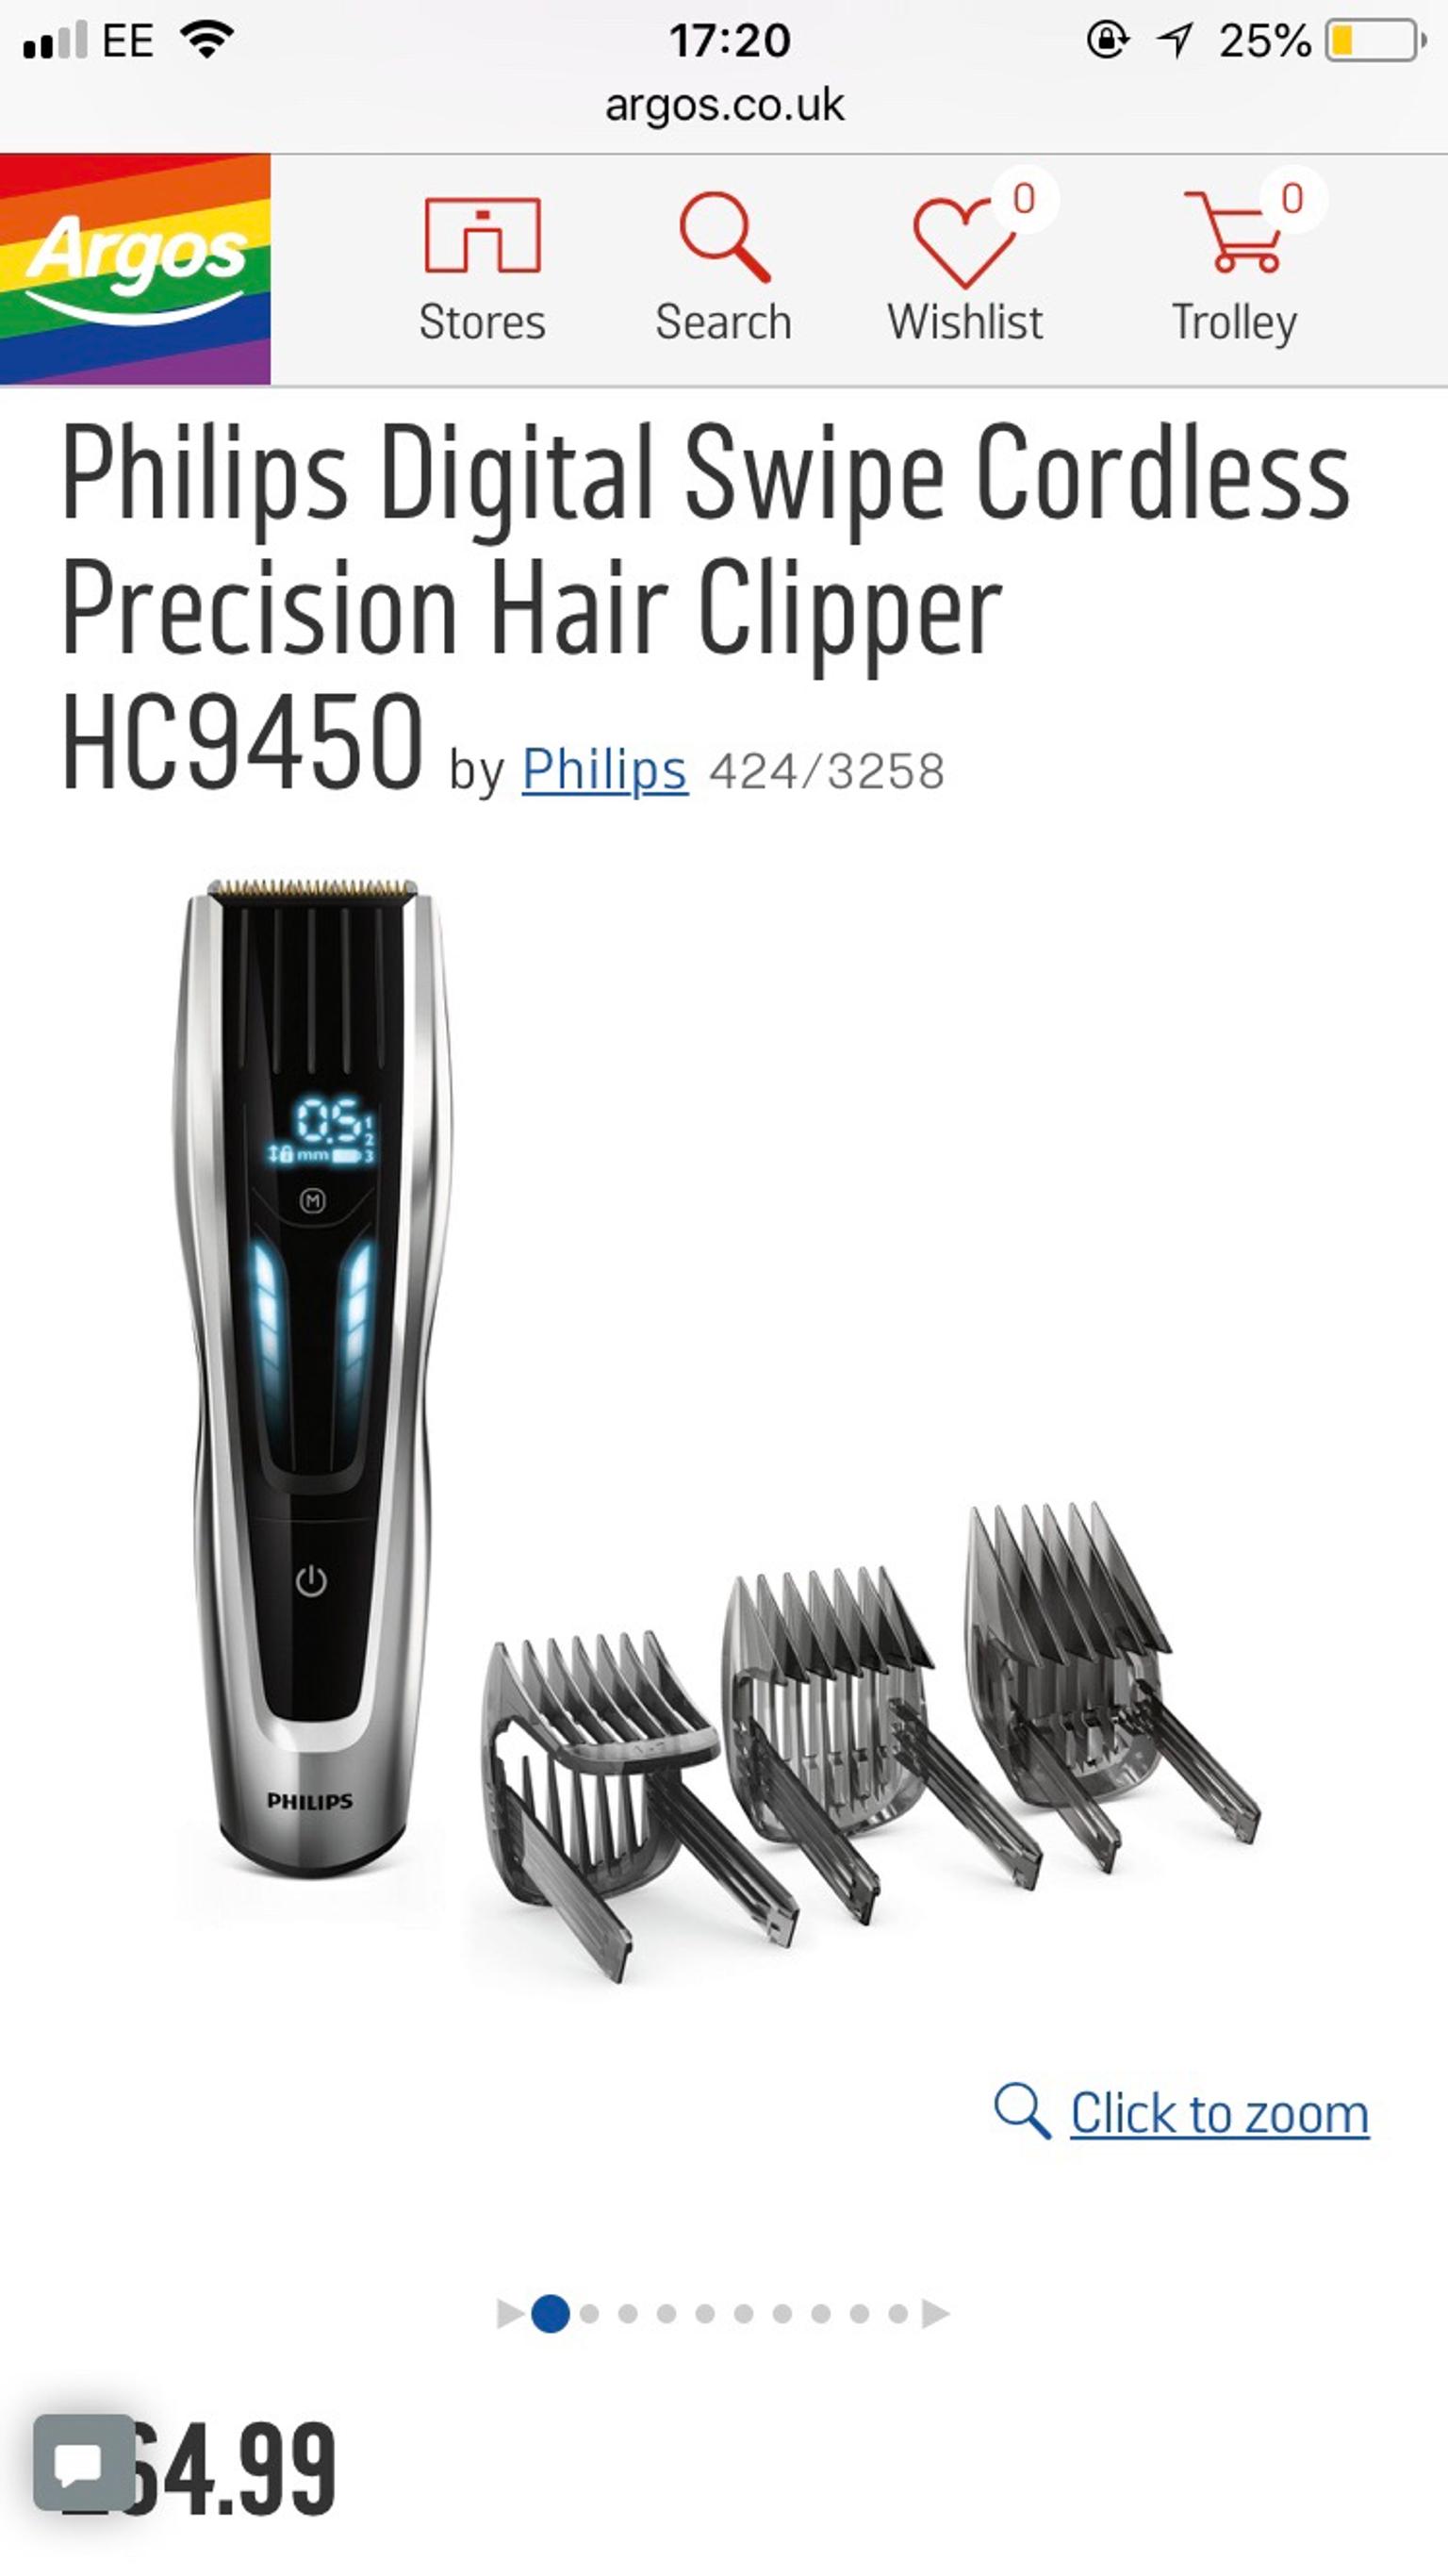 philips digital swipe cordless precision hair clipper